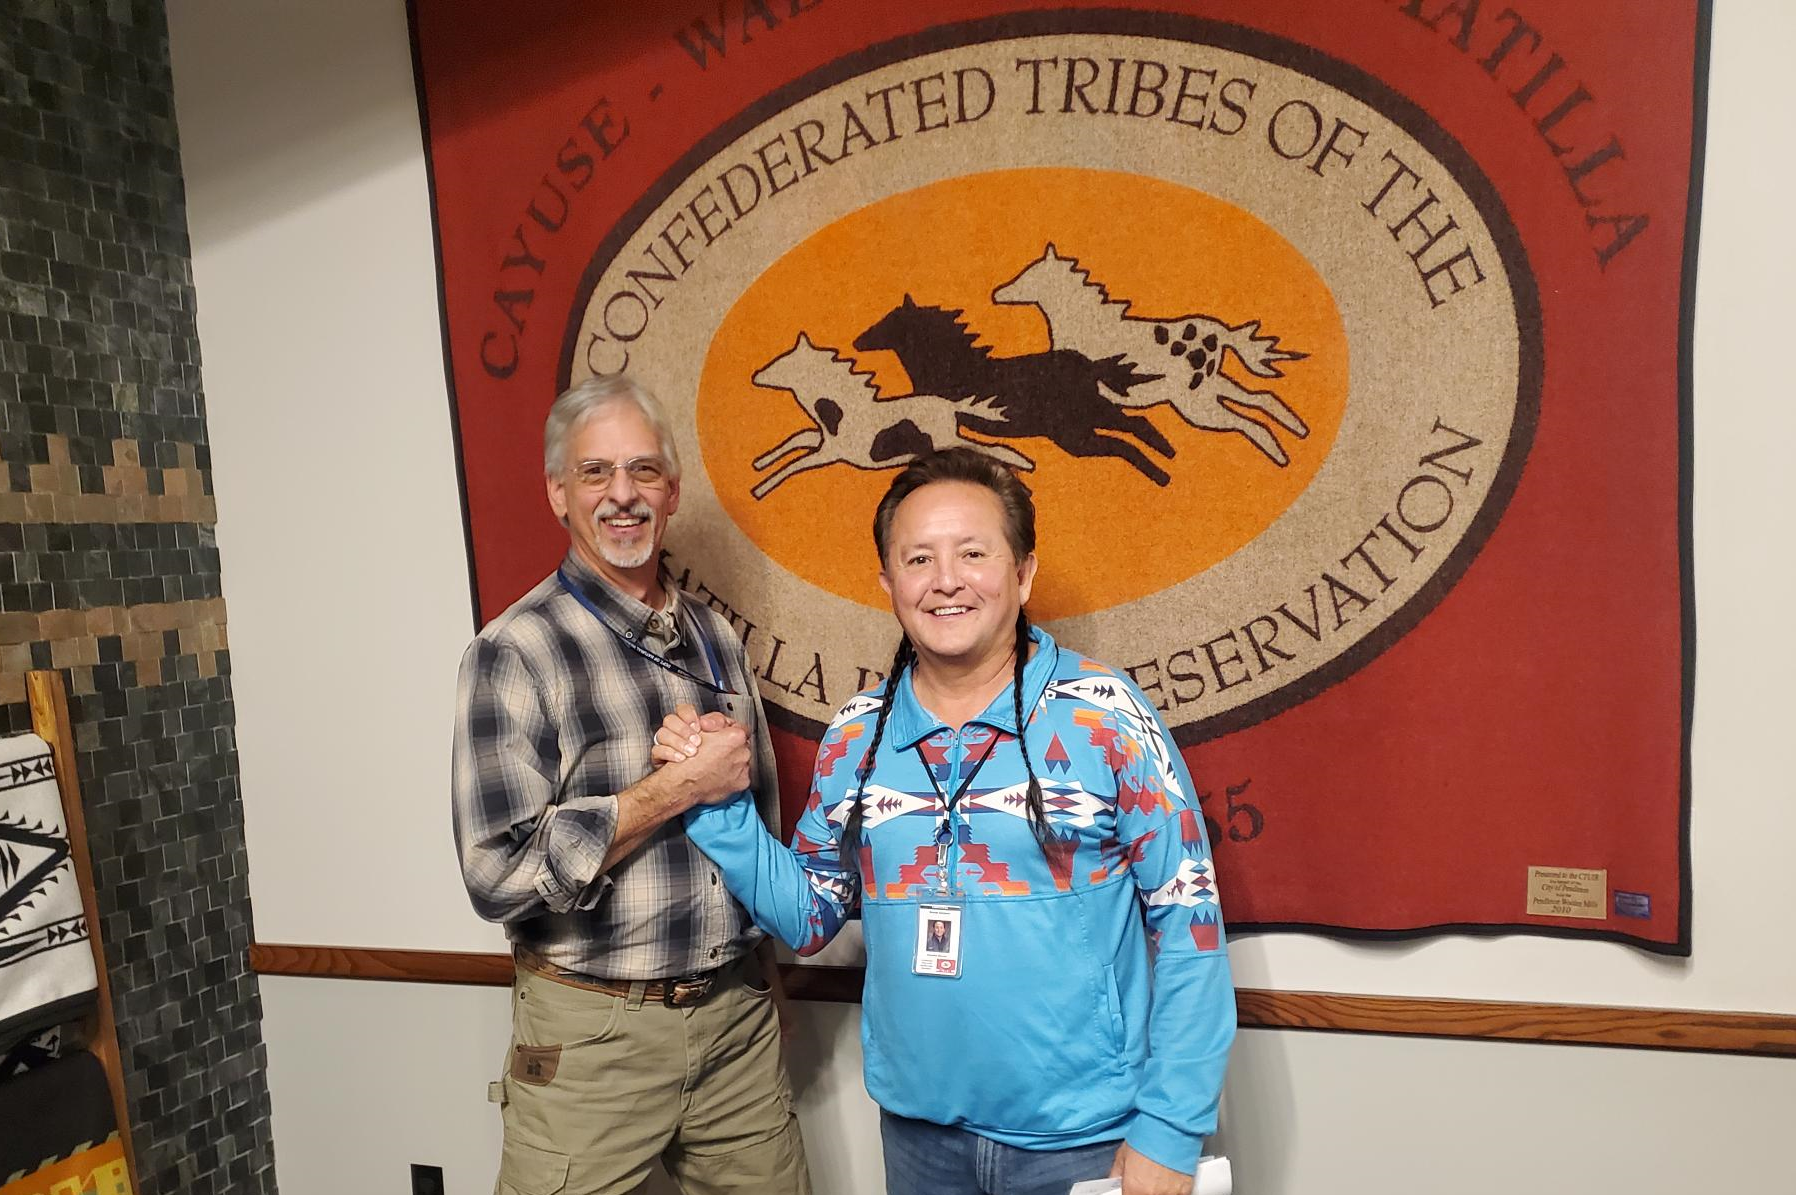 Spokane Indians' New Uniforms Have Team Name in Native Spokane Salish  Language, Smart News